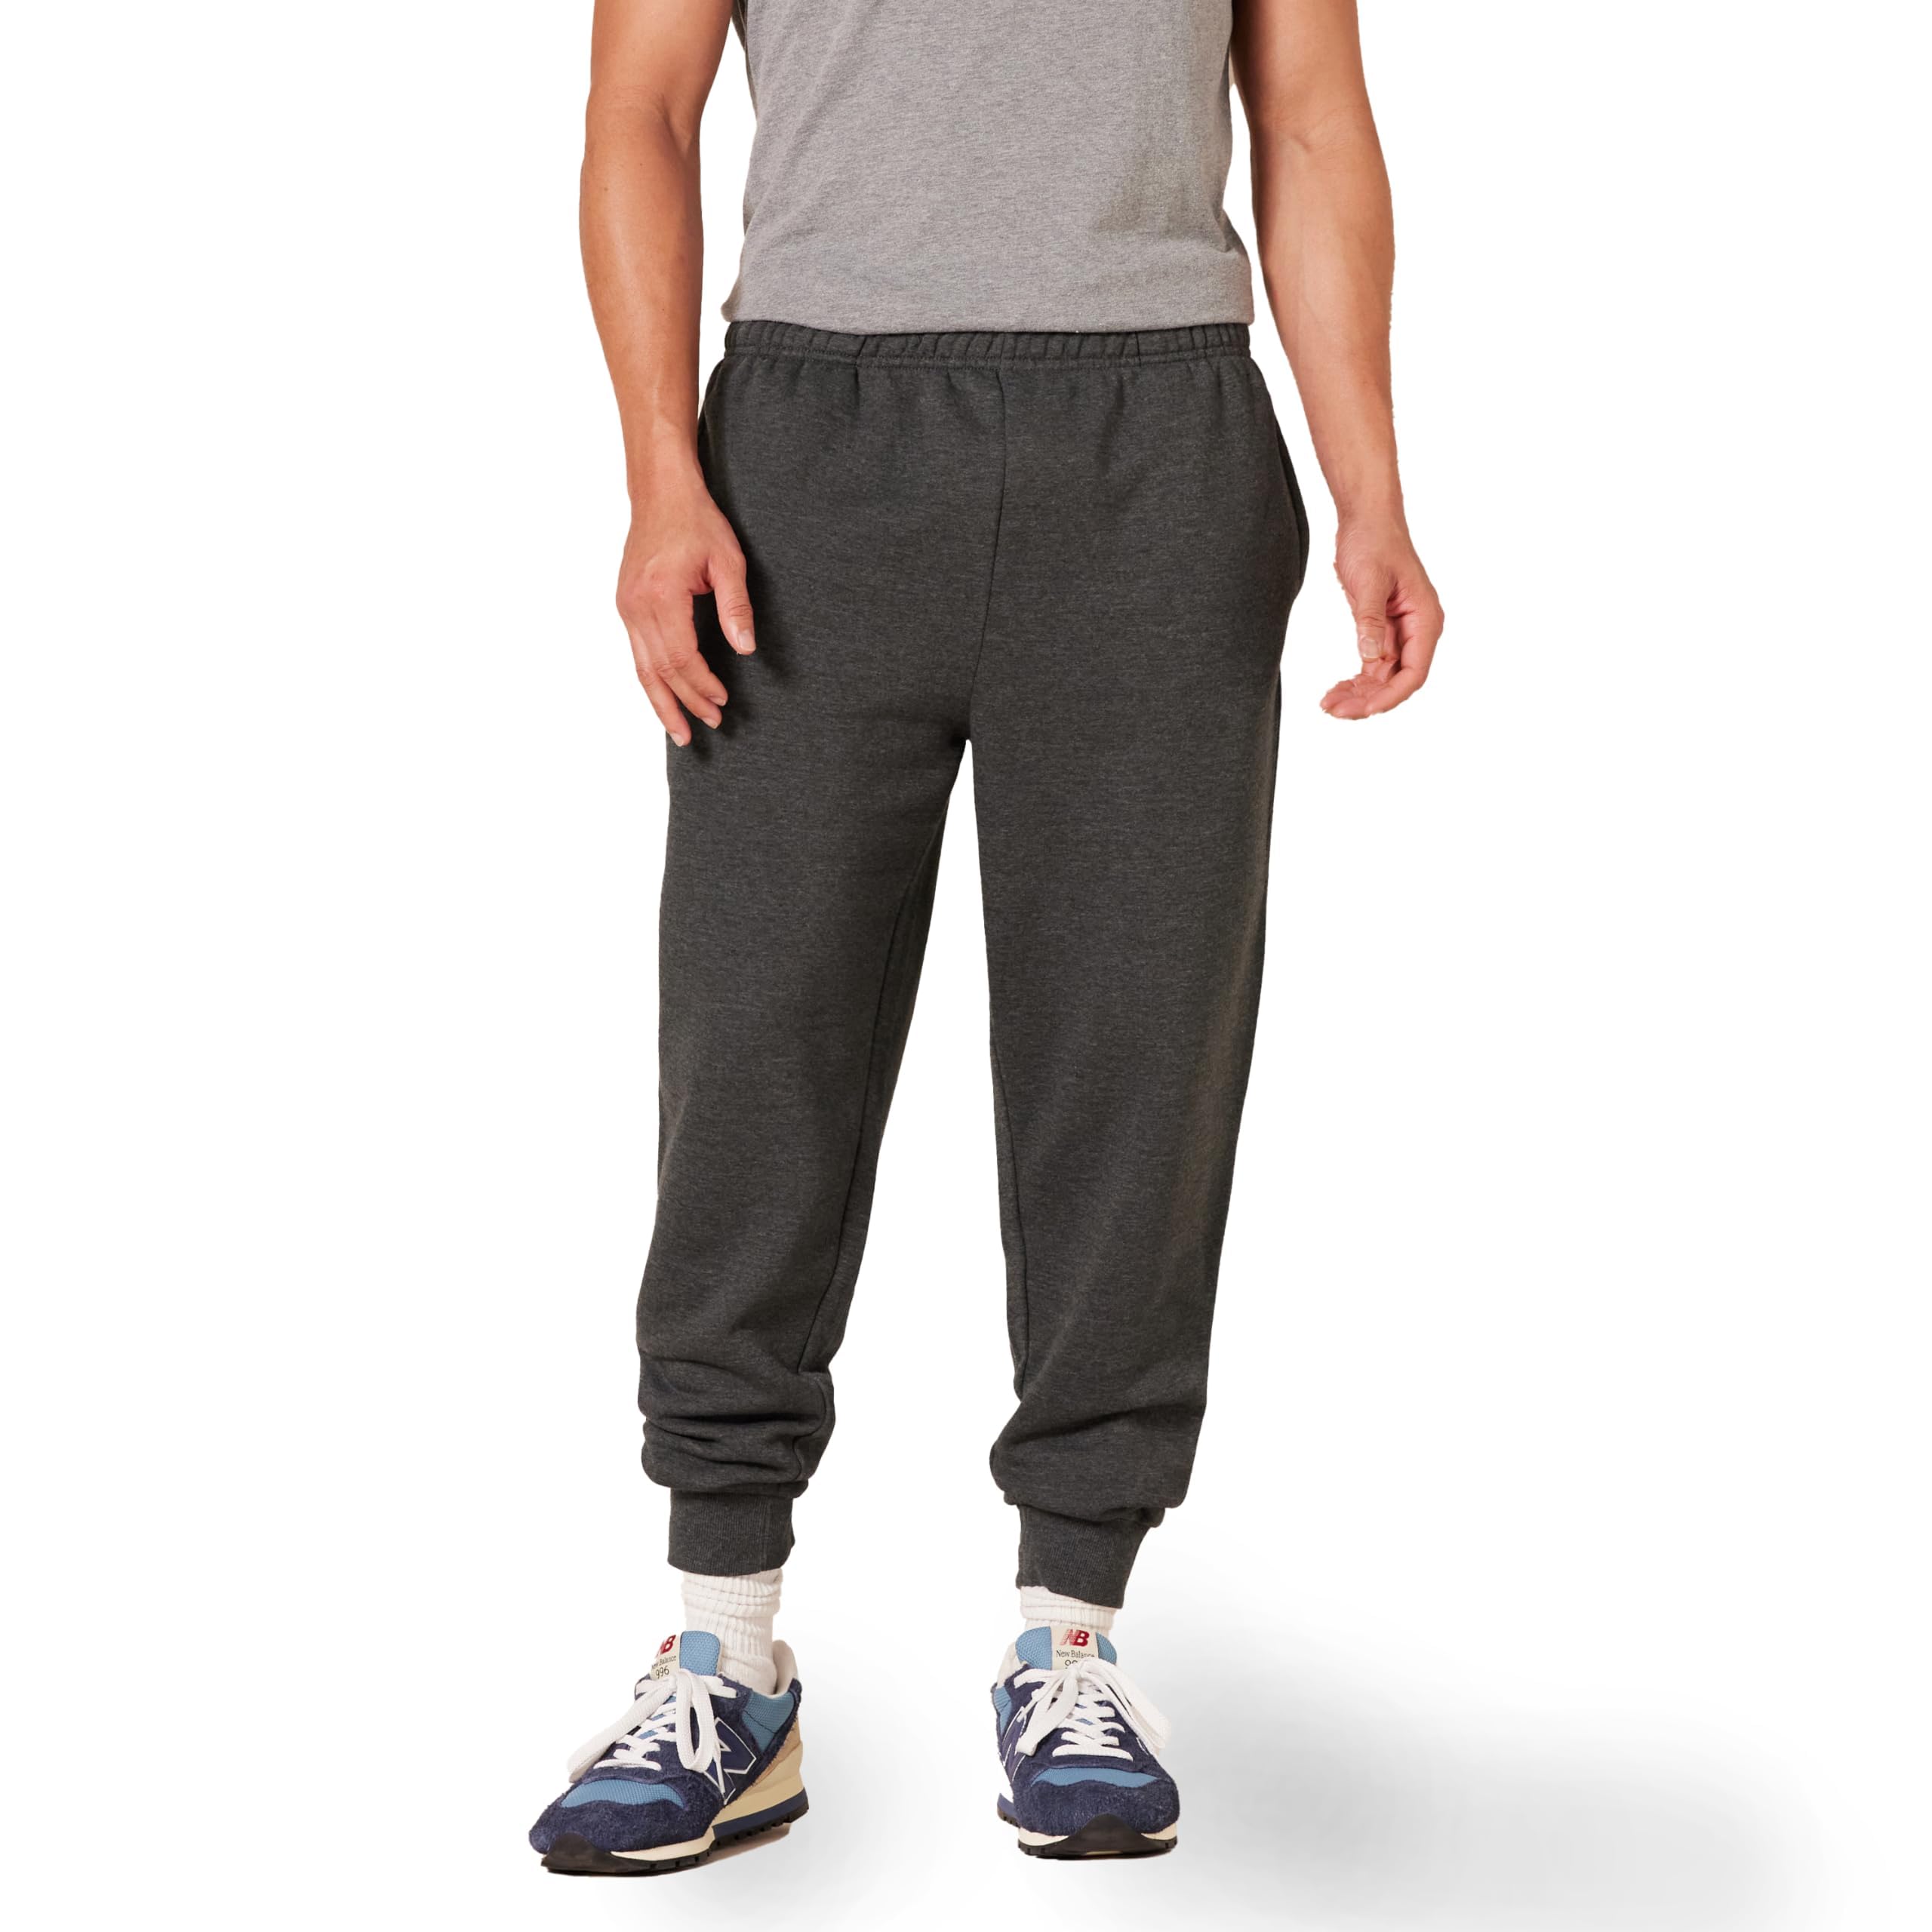 Amazon Essentials Men's Fleece Jogger Pant $5.90: XS, S Only